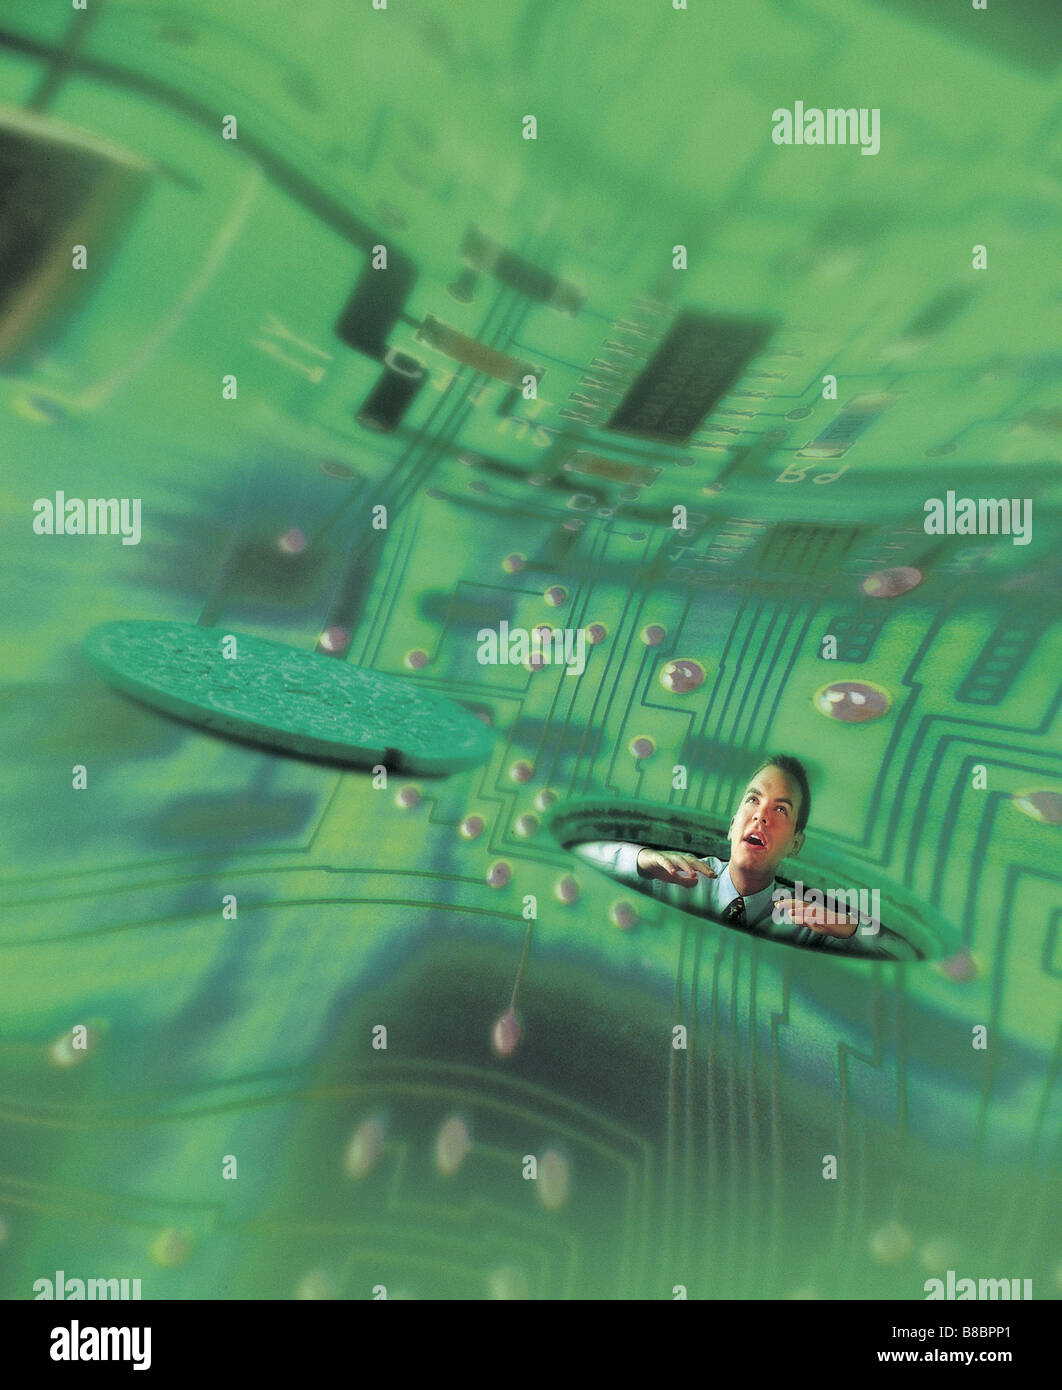 FL4386, Jim Tinios; Man Peering Up Through Manhole into Distorted Green Circuitry Background Stock Photo